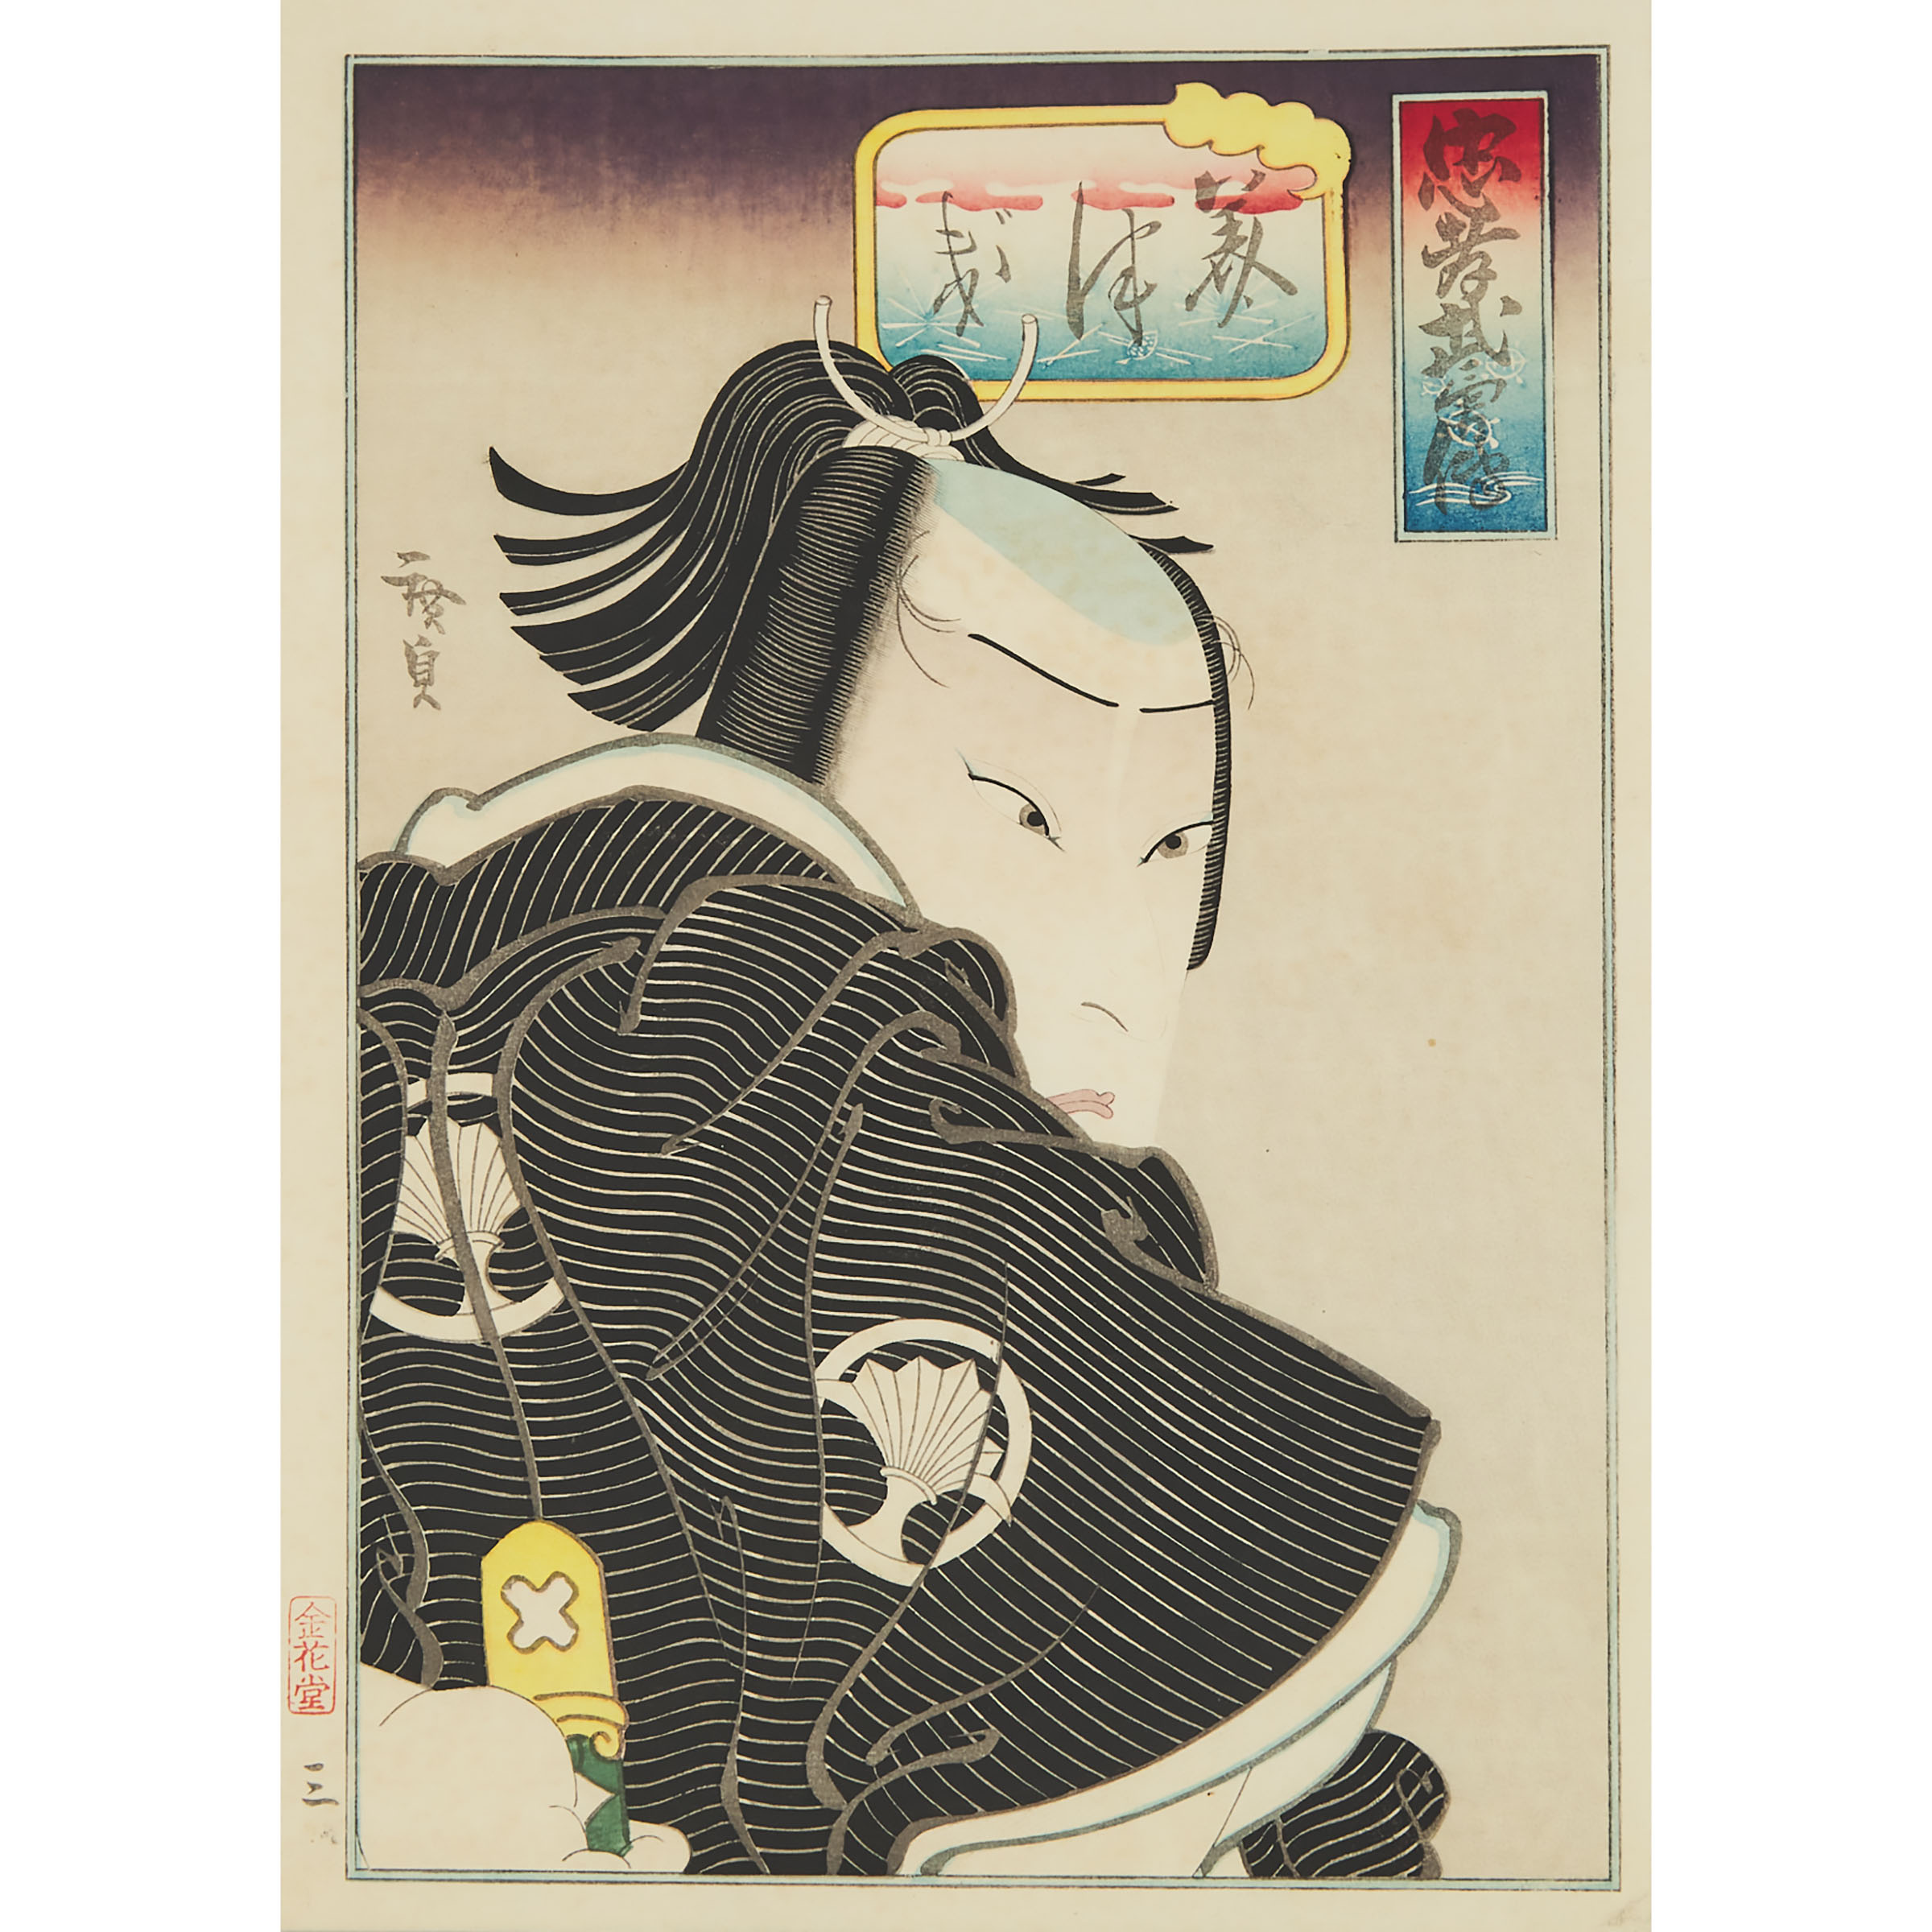 Konishi Hirosada (1819-1865), Japanese Woodblock Print Depicting an Actor, Mid 19th Century